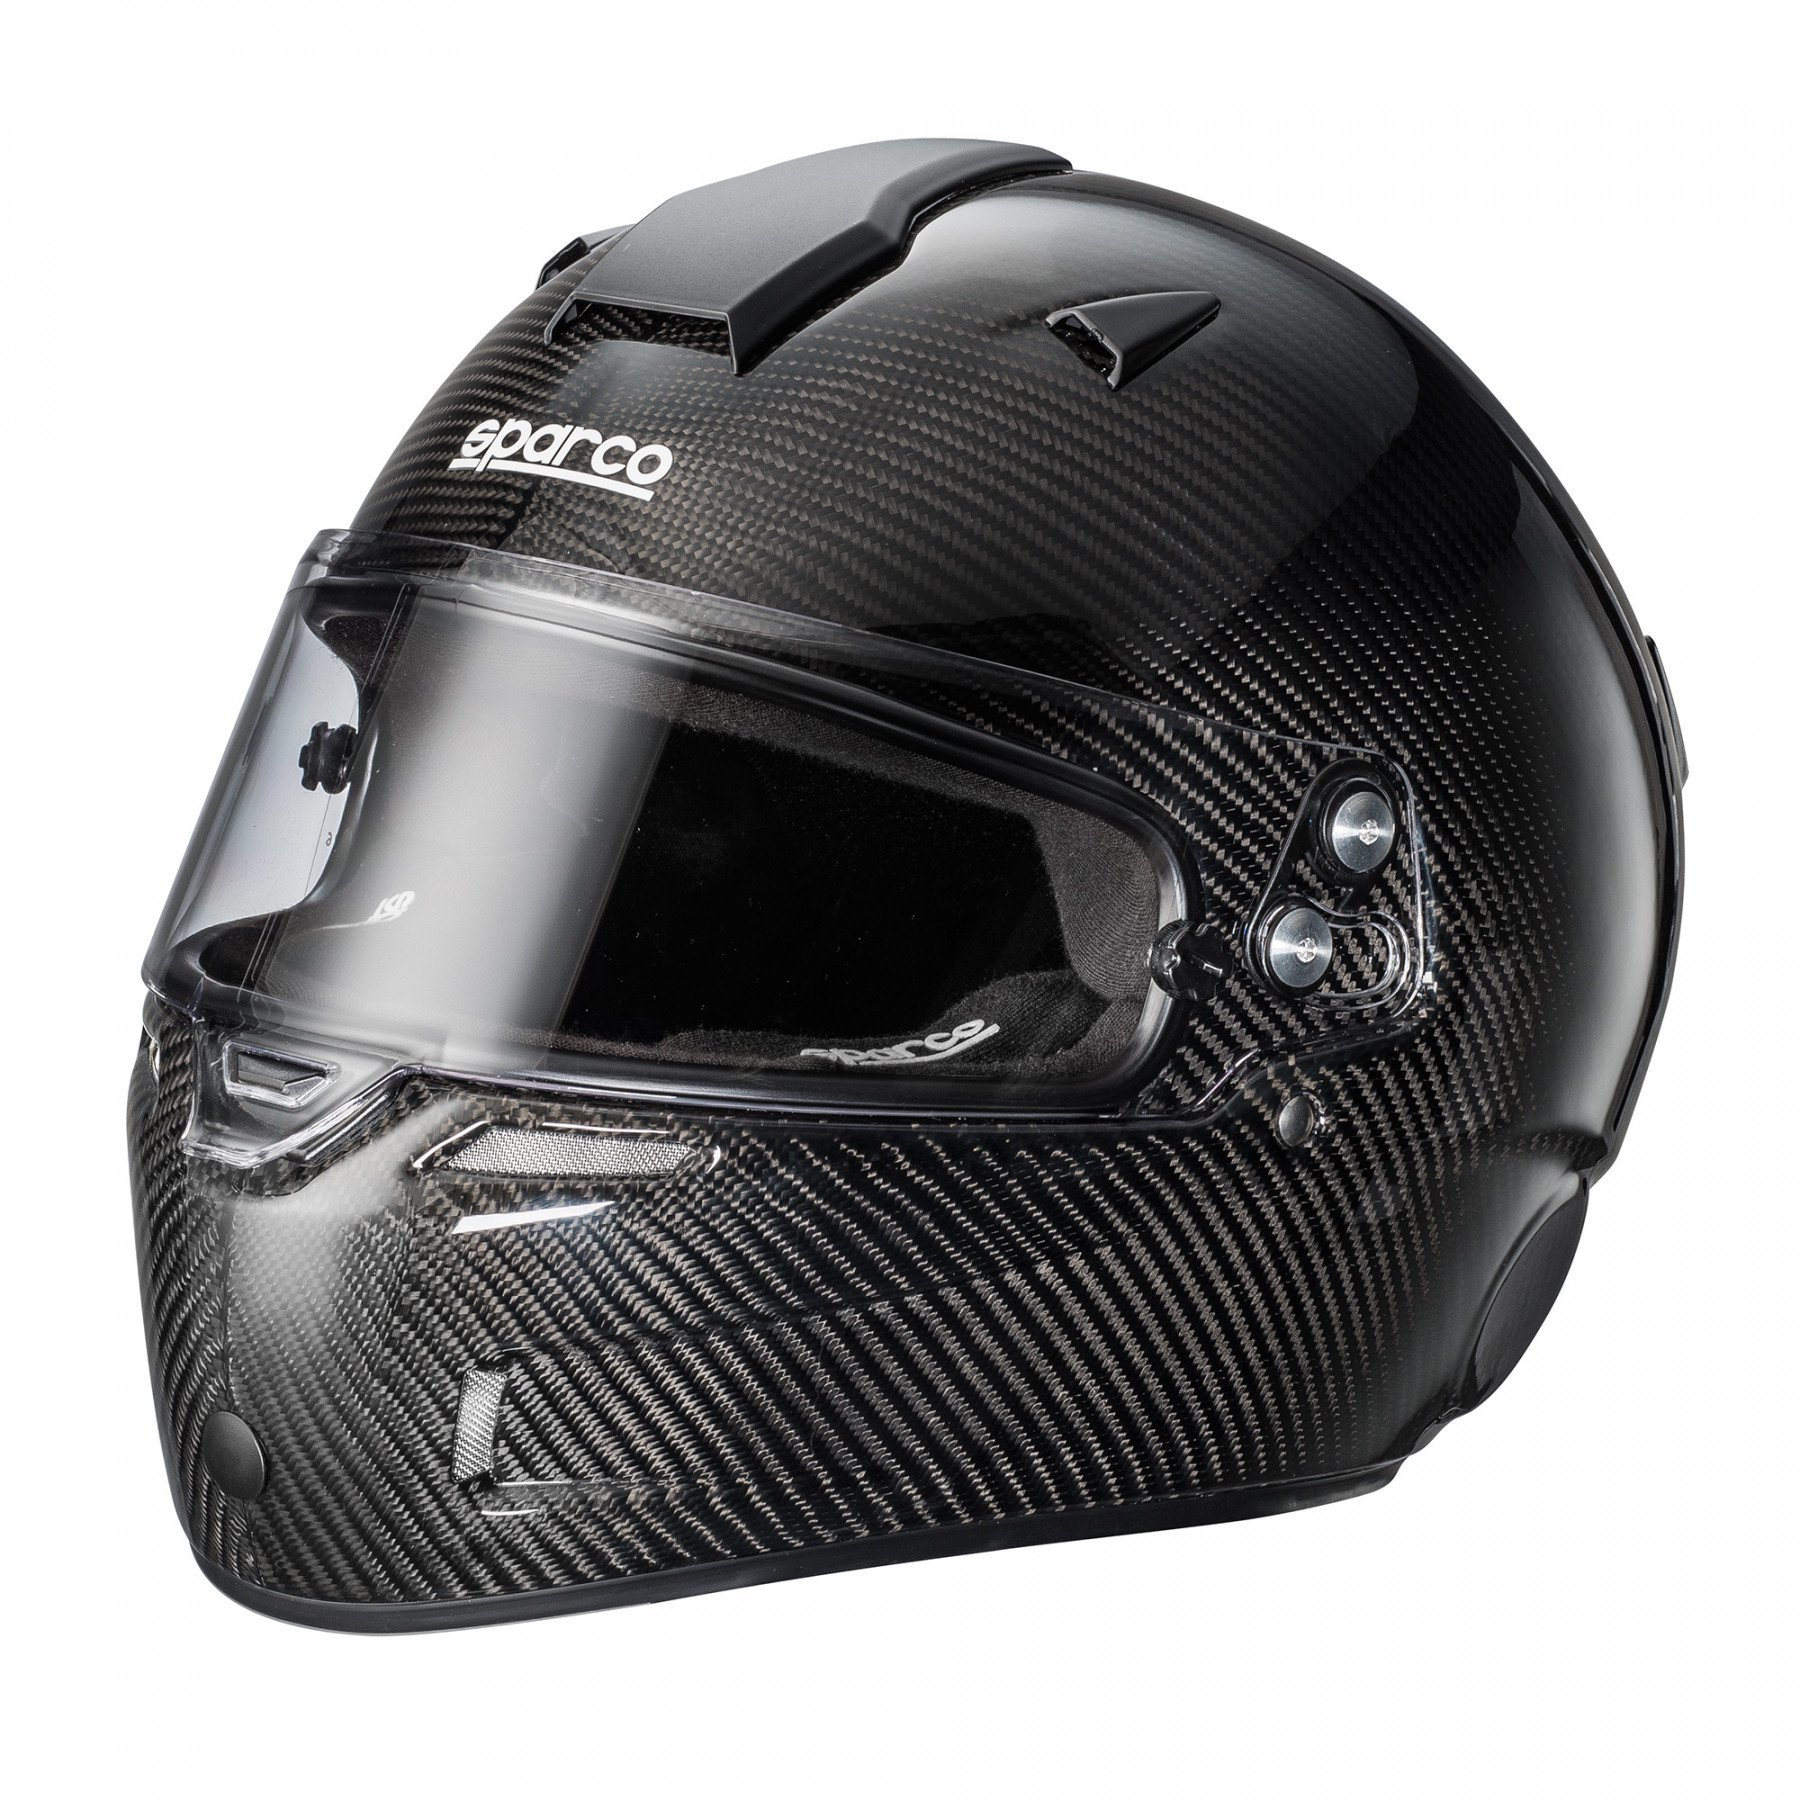 Sparco Helmet KF-7W Carbon